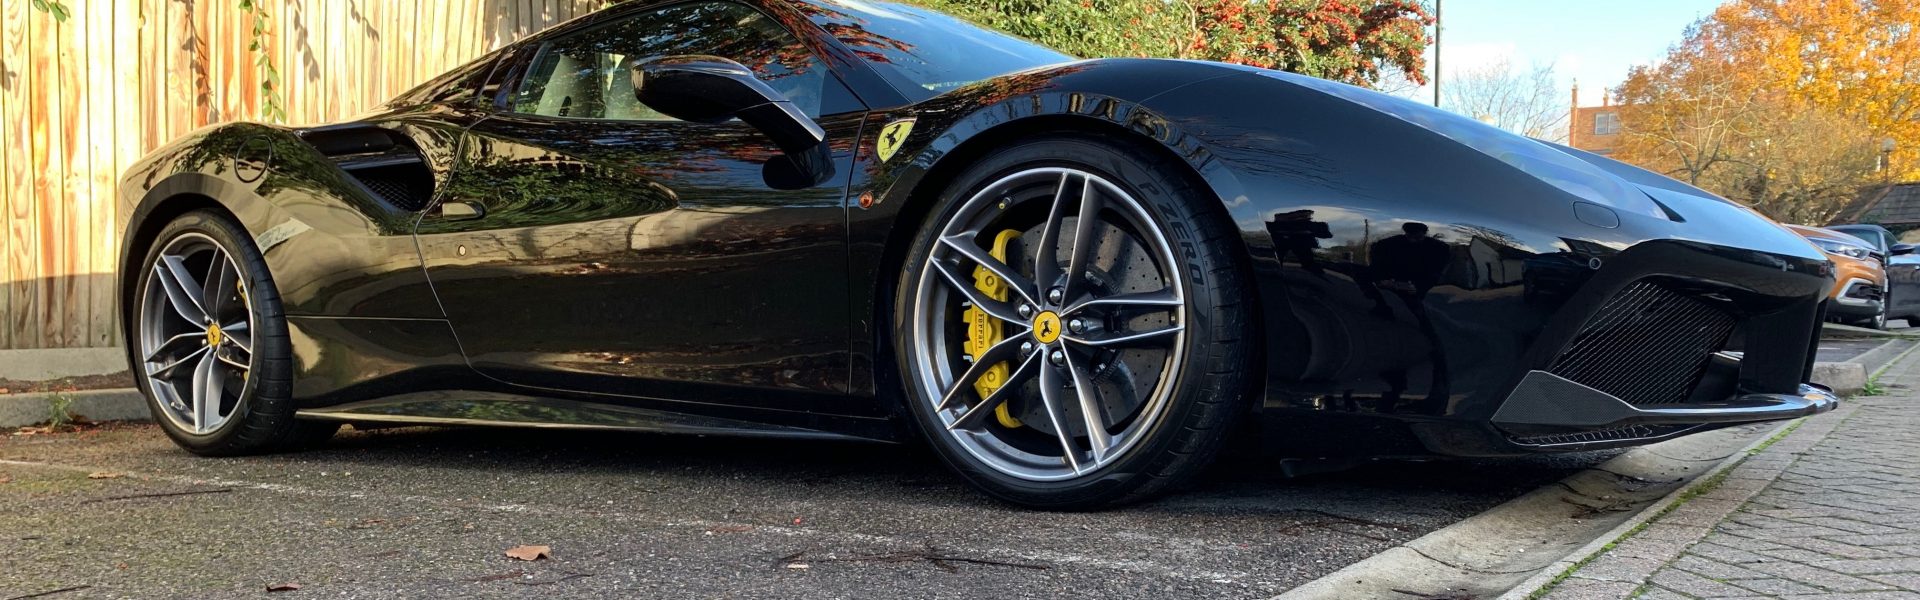 Ferrari 488 Upgrades: Sport Exhaust, Carbon Fibre, and Lowering Springs